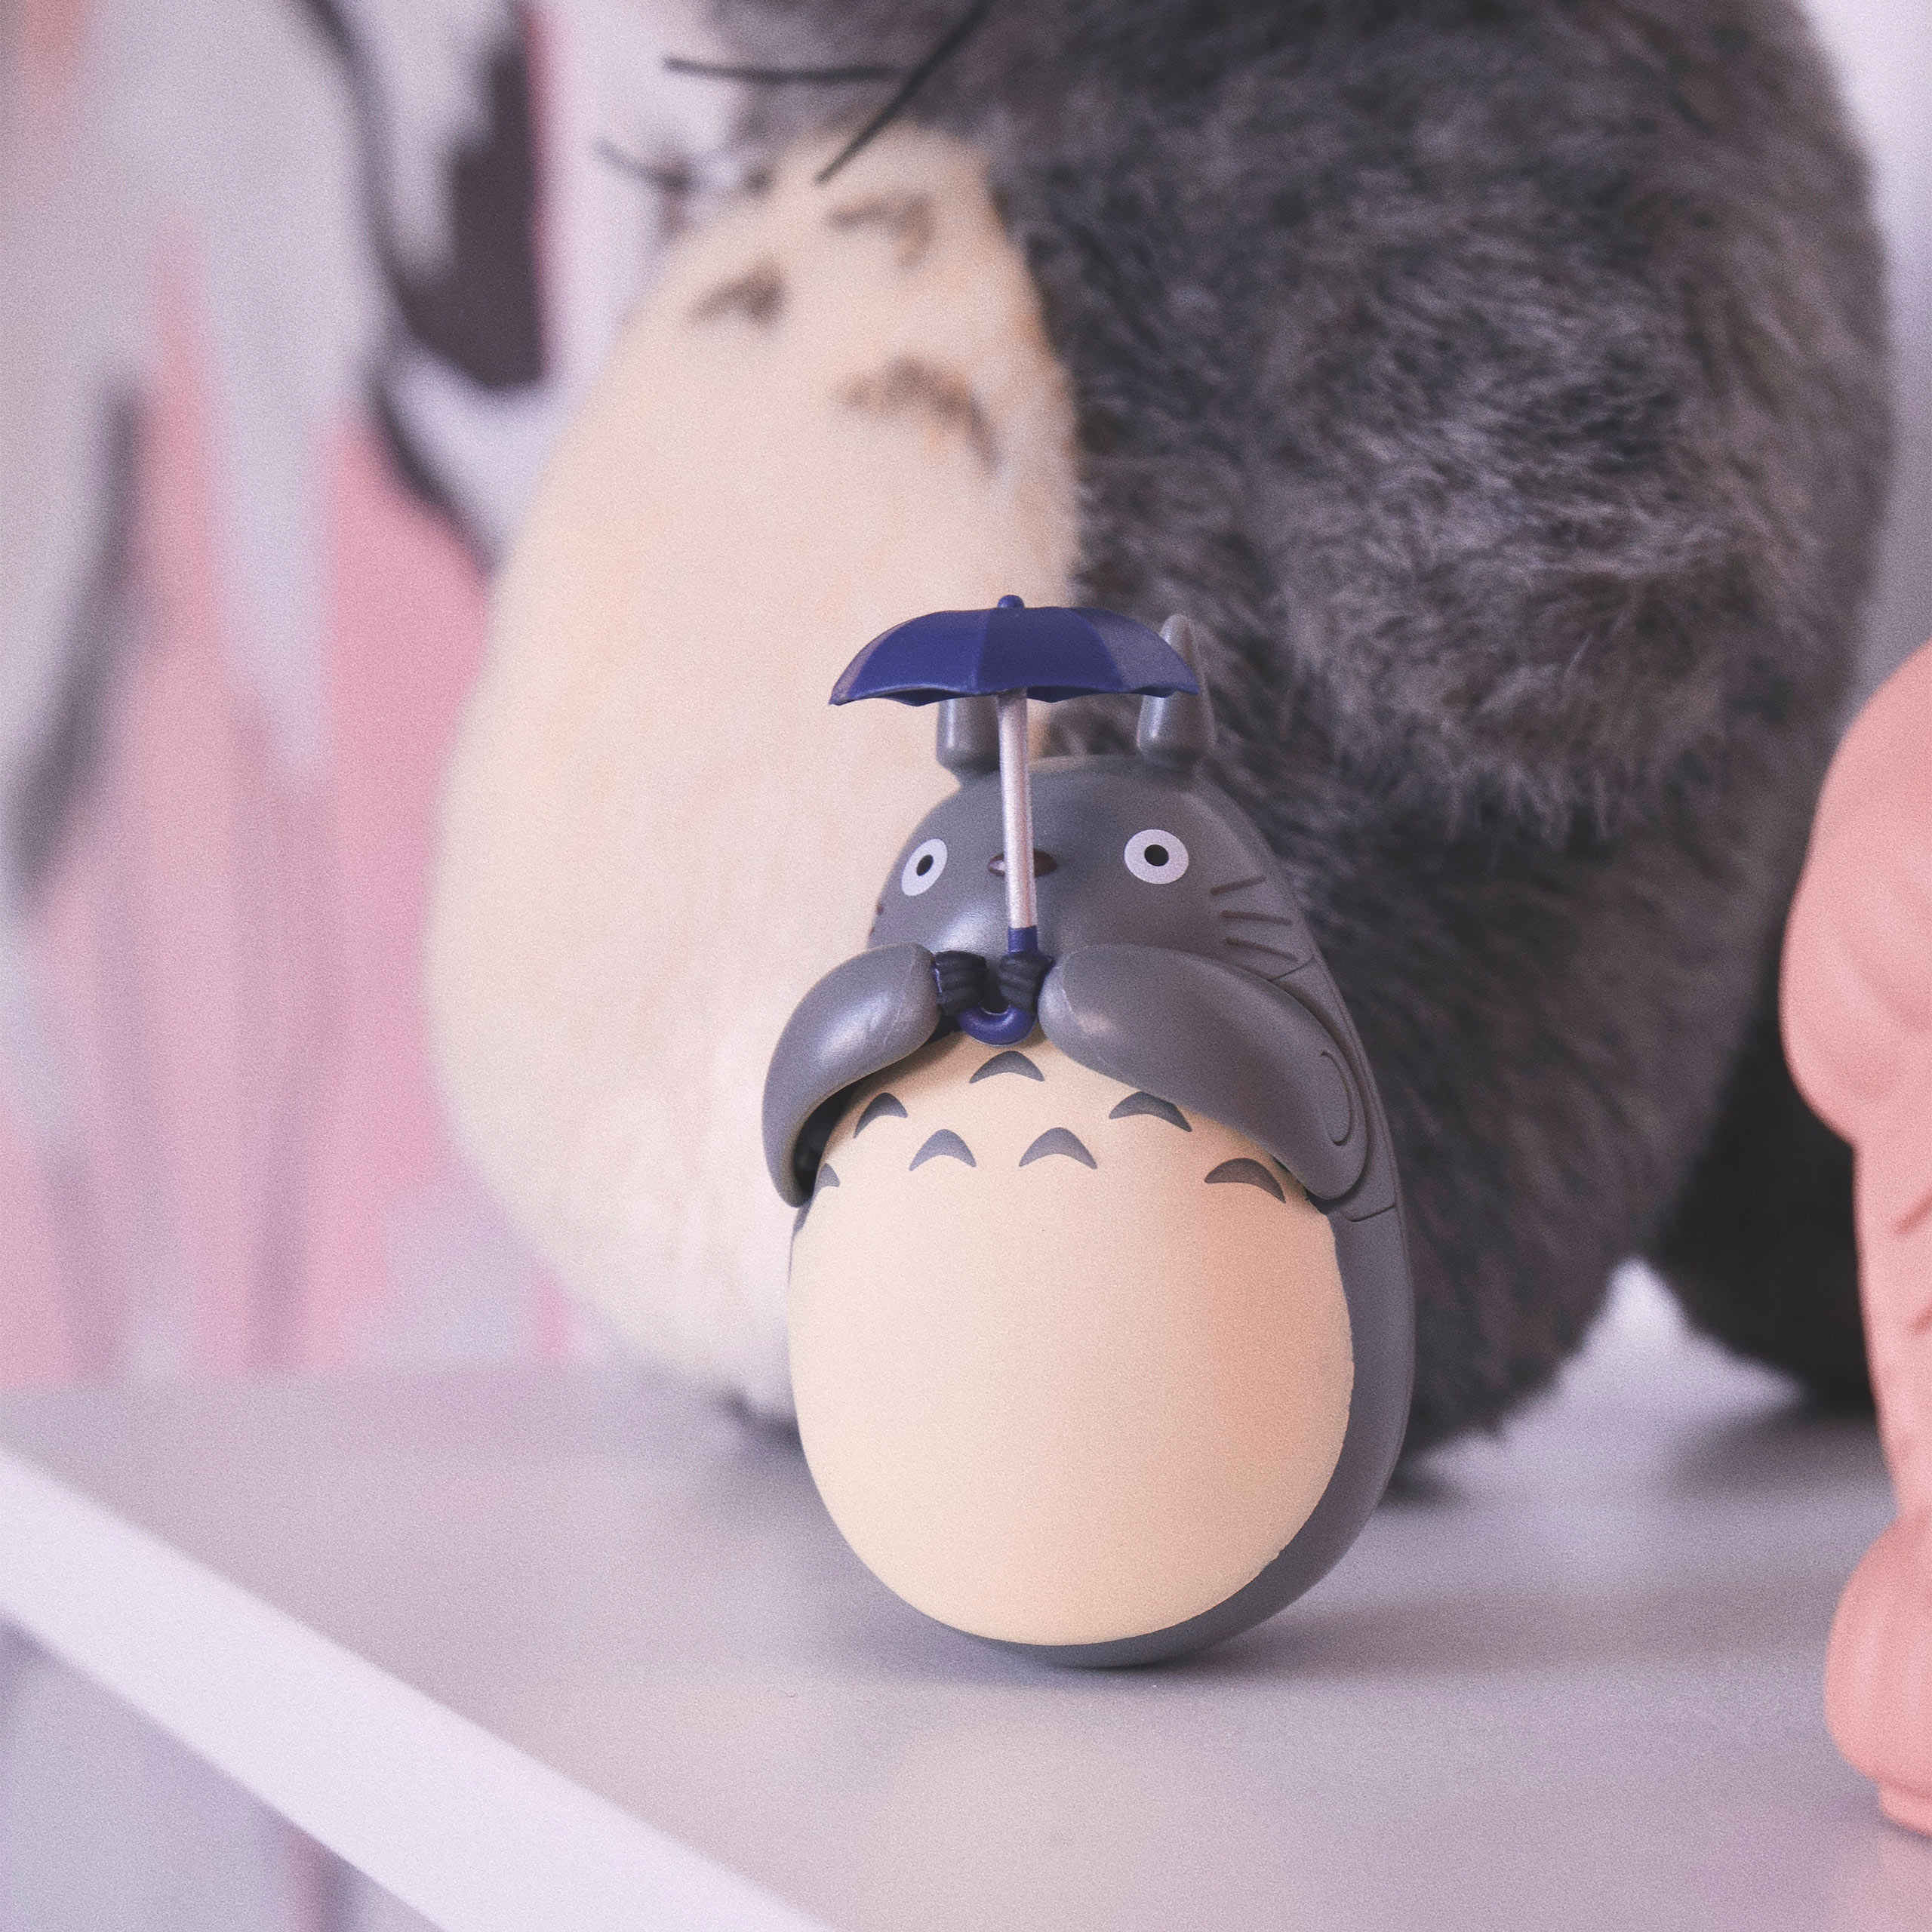 Totoro - Miminzuku Oh-Totoro Roly-Poly Figure with Umbrella